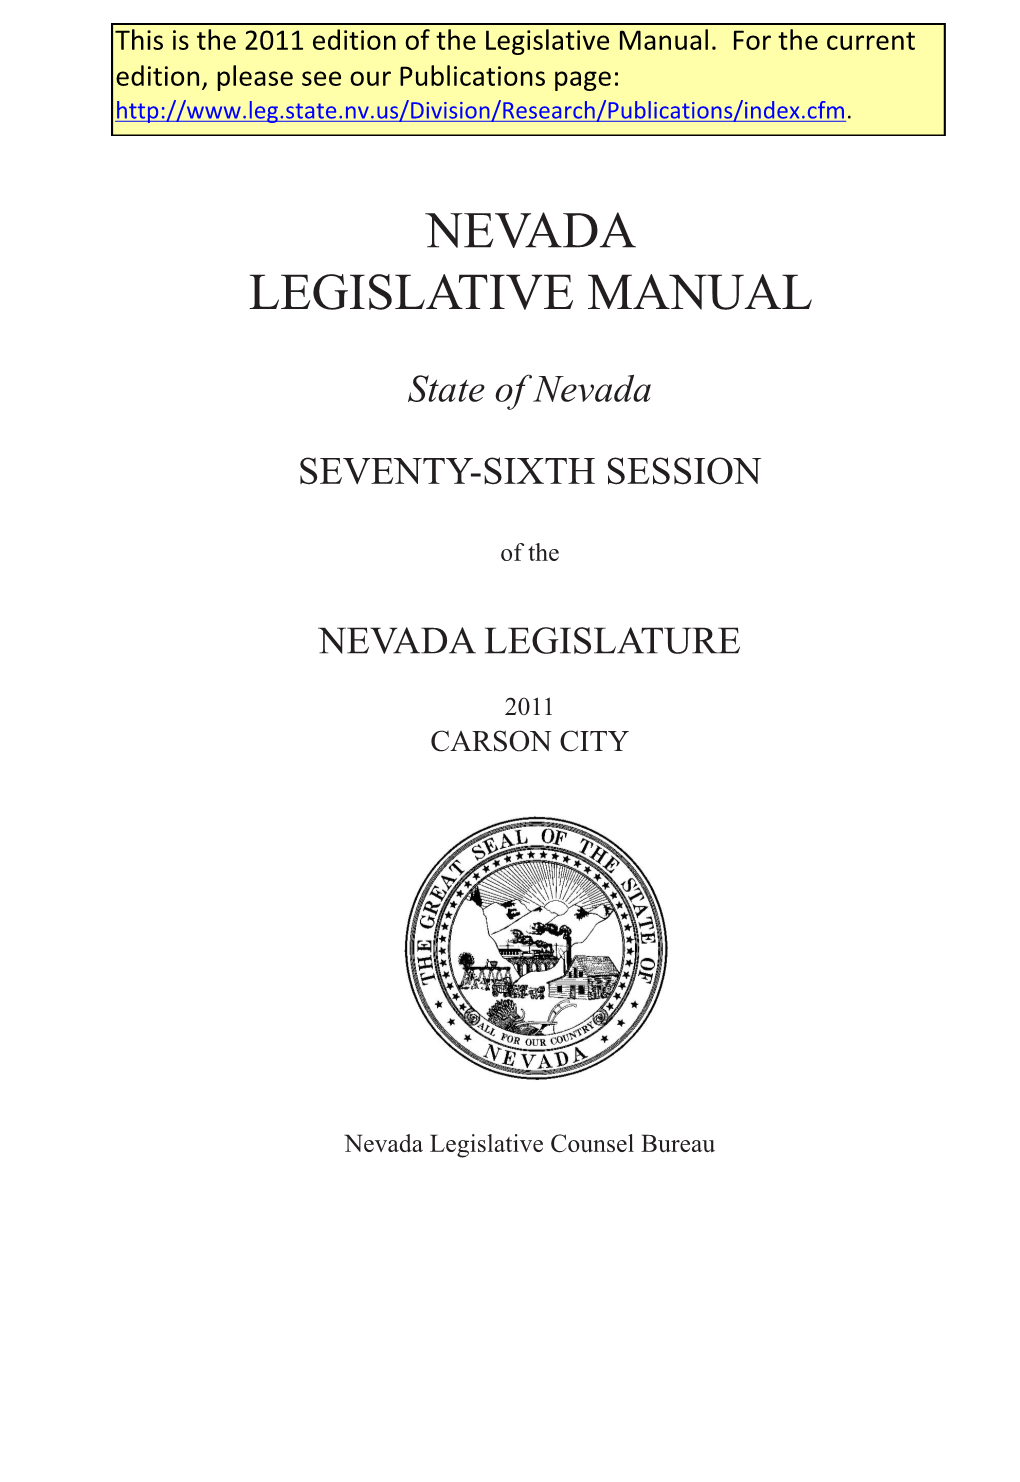 2011 Legislative Manual